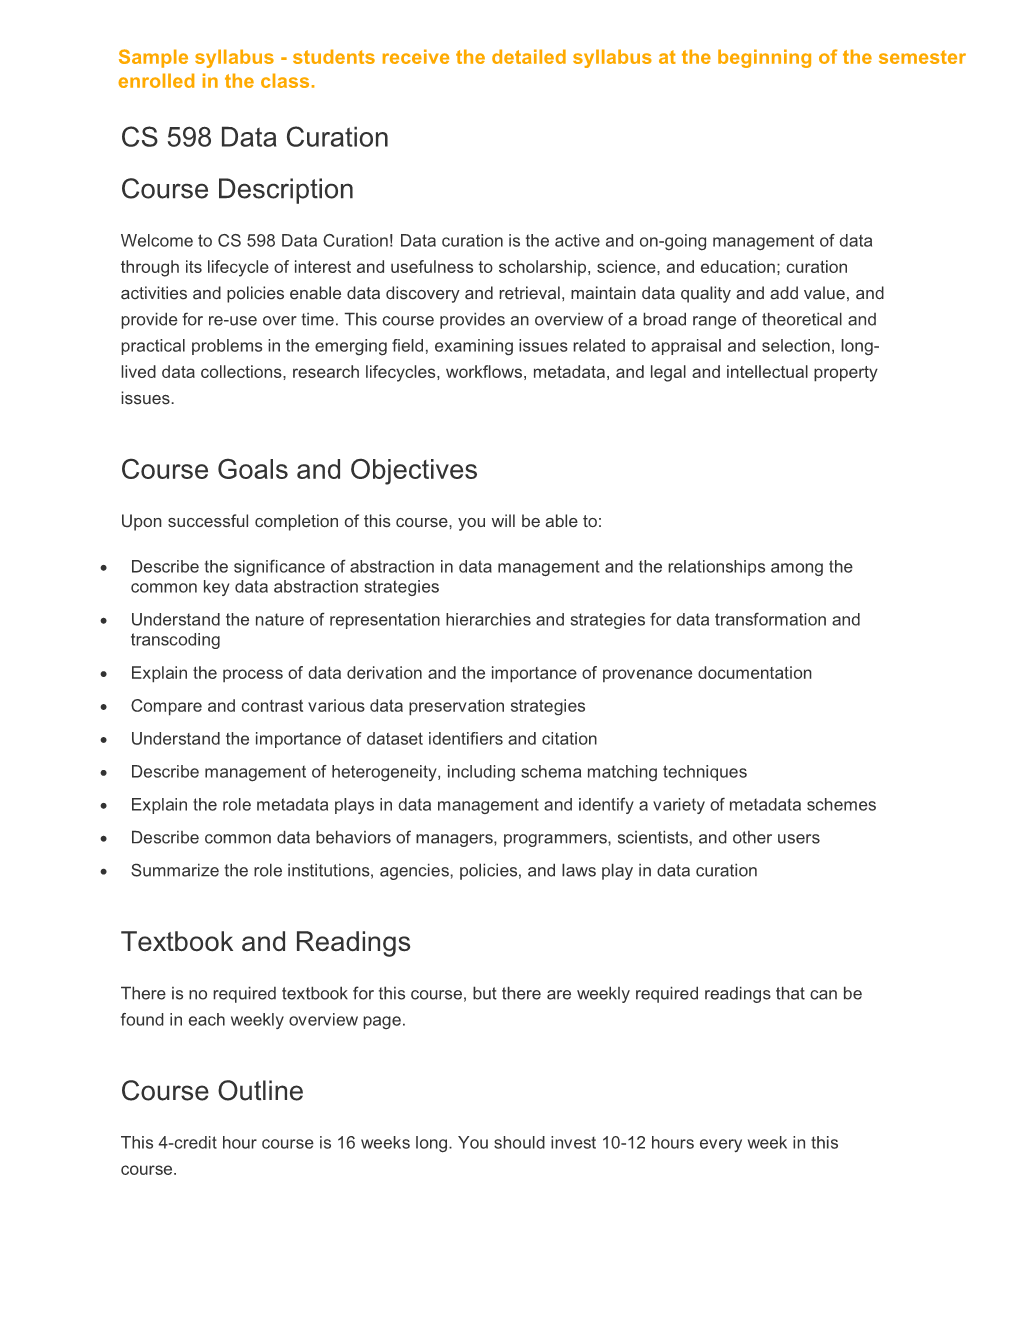 CS 598 Data Curation Course Description Course Goals And